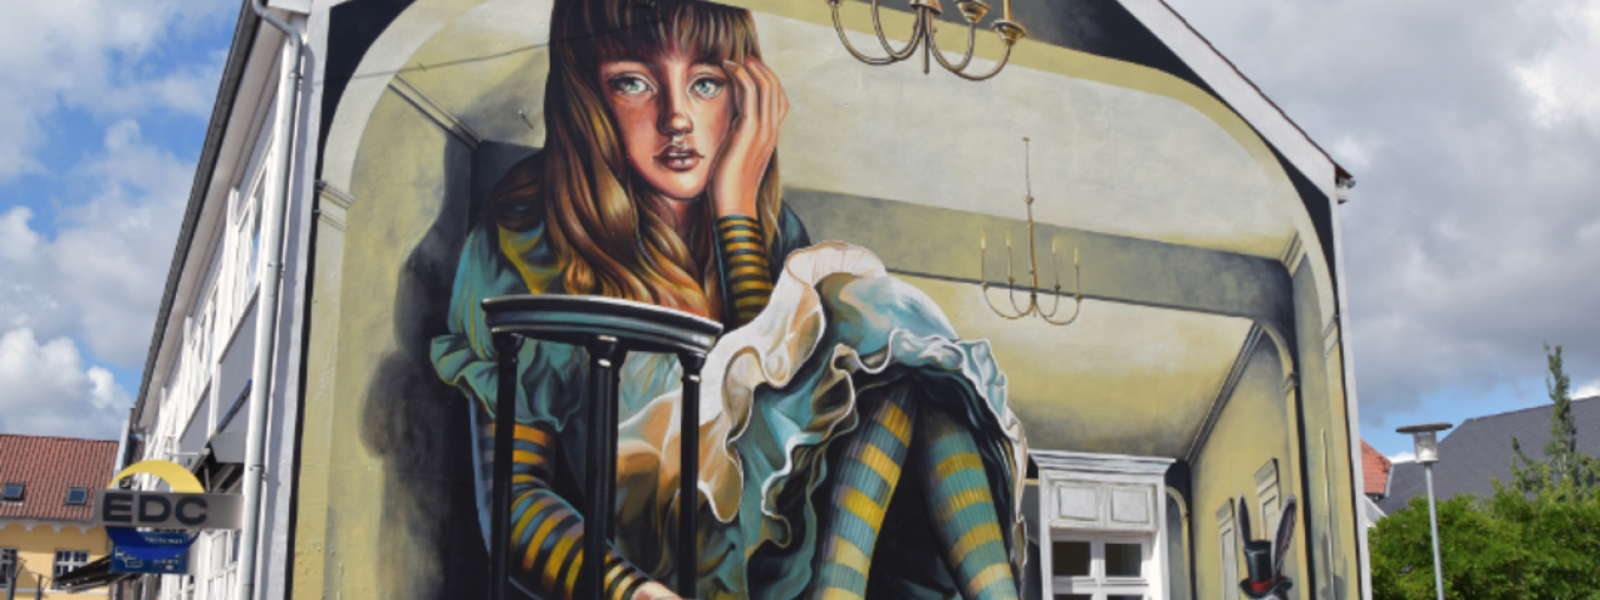 International street art Danmark 2019